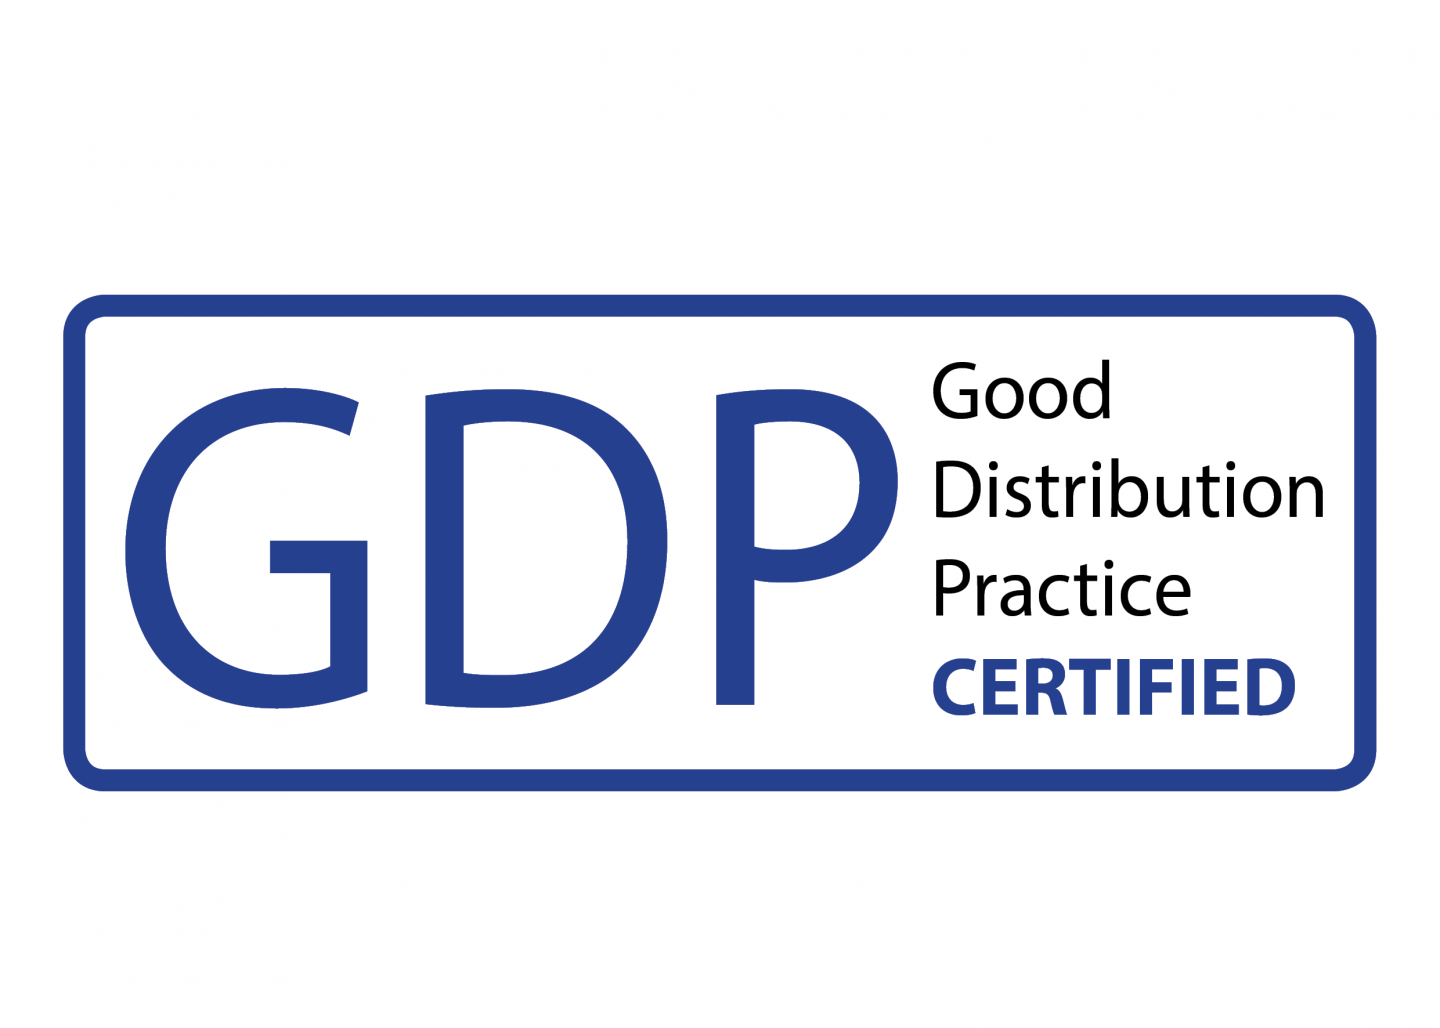 GDP стандарт. Надлежащая дистрибьюторская практика GDP. GDP good distribution Practice надлежащая дистрибьюторская практика. Сертификат GDP. Надлежащая упаковка